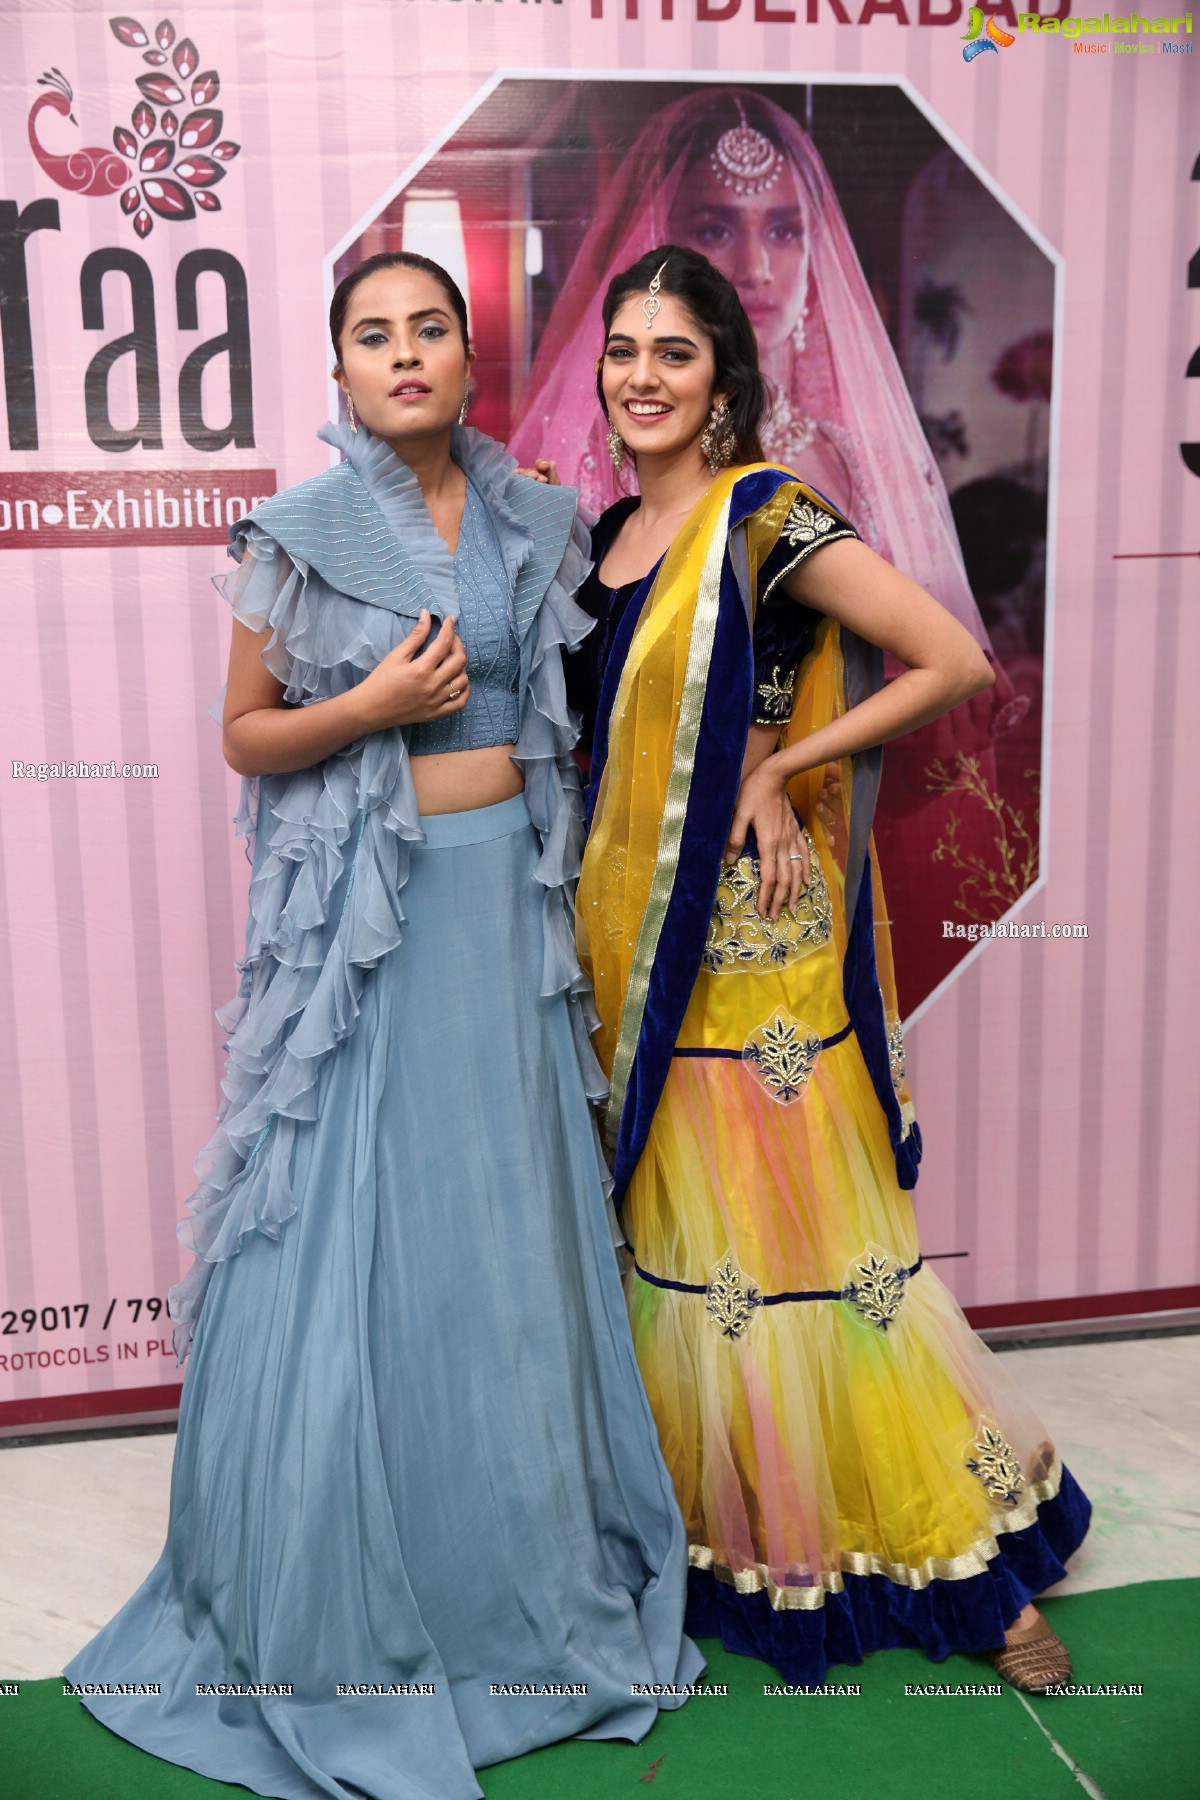 Sutraa Fashion & Lifestyle Exhibition Curtain Raiser at Marks Media Center